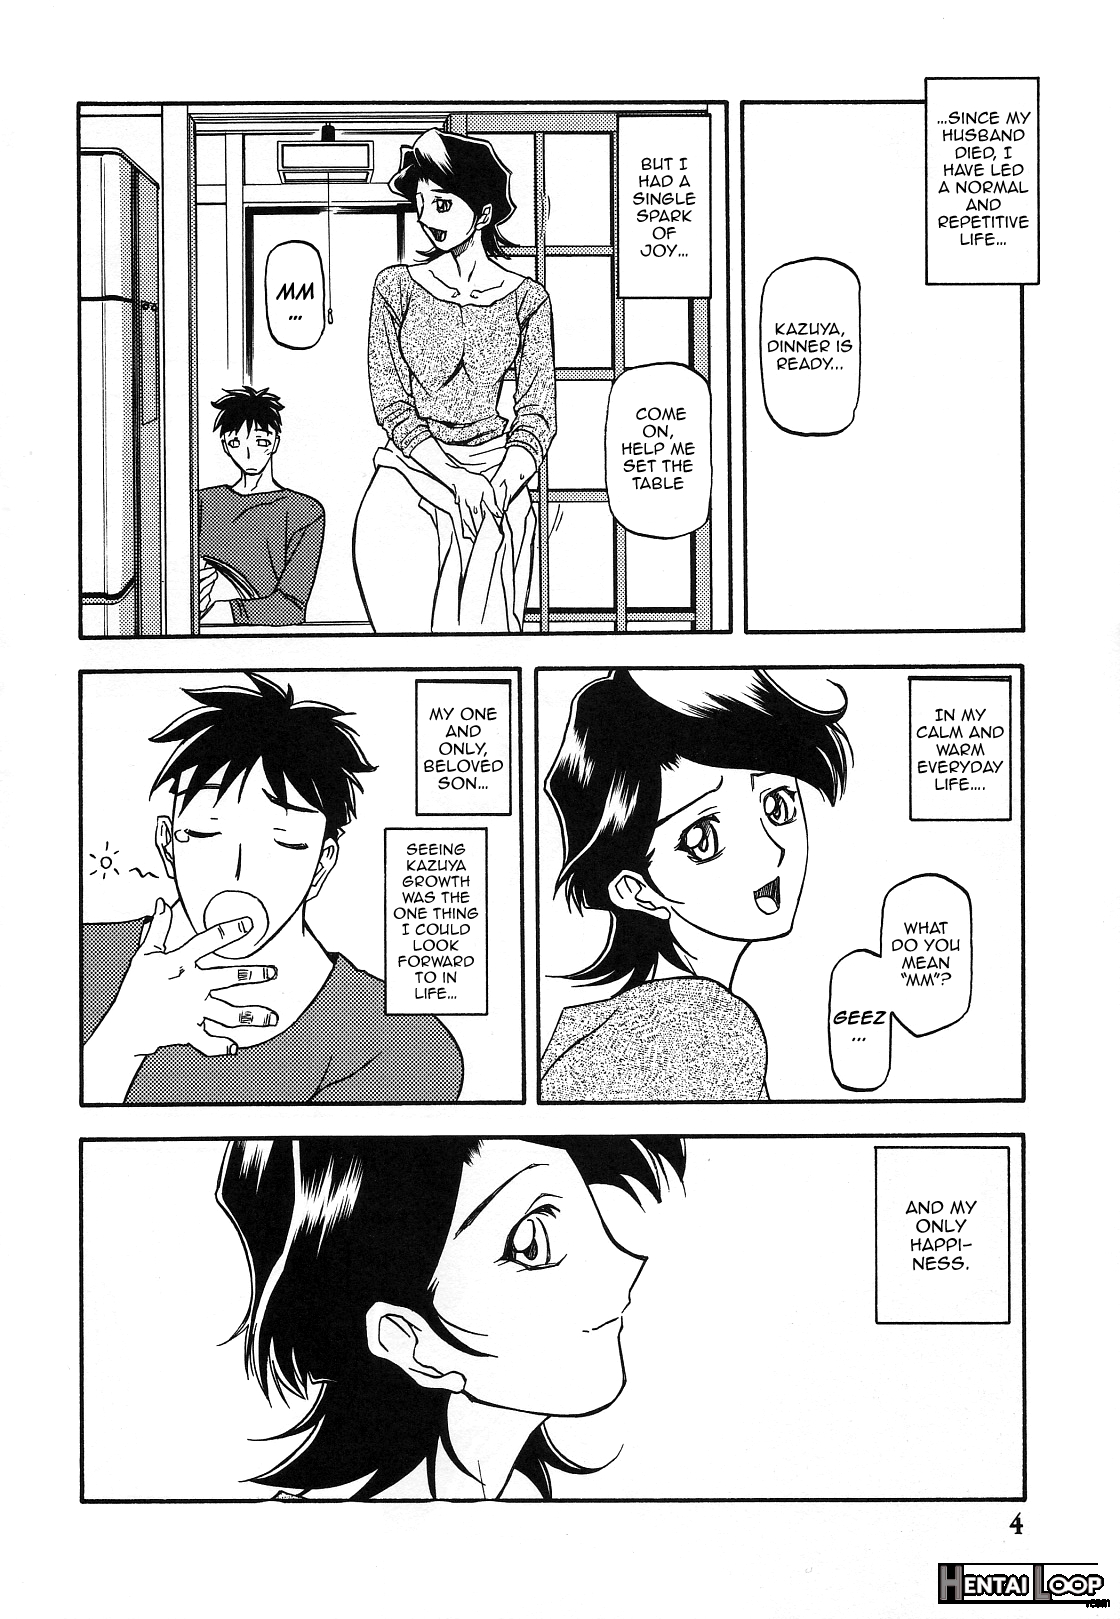 Akebi No Mi - Masae Zero Katei page 3